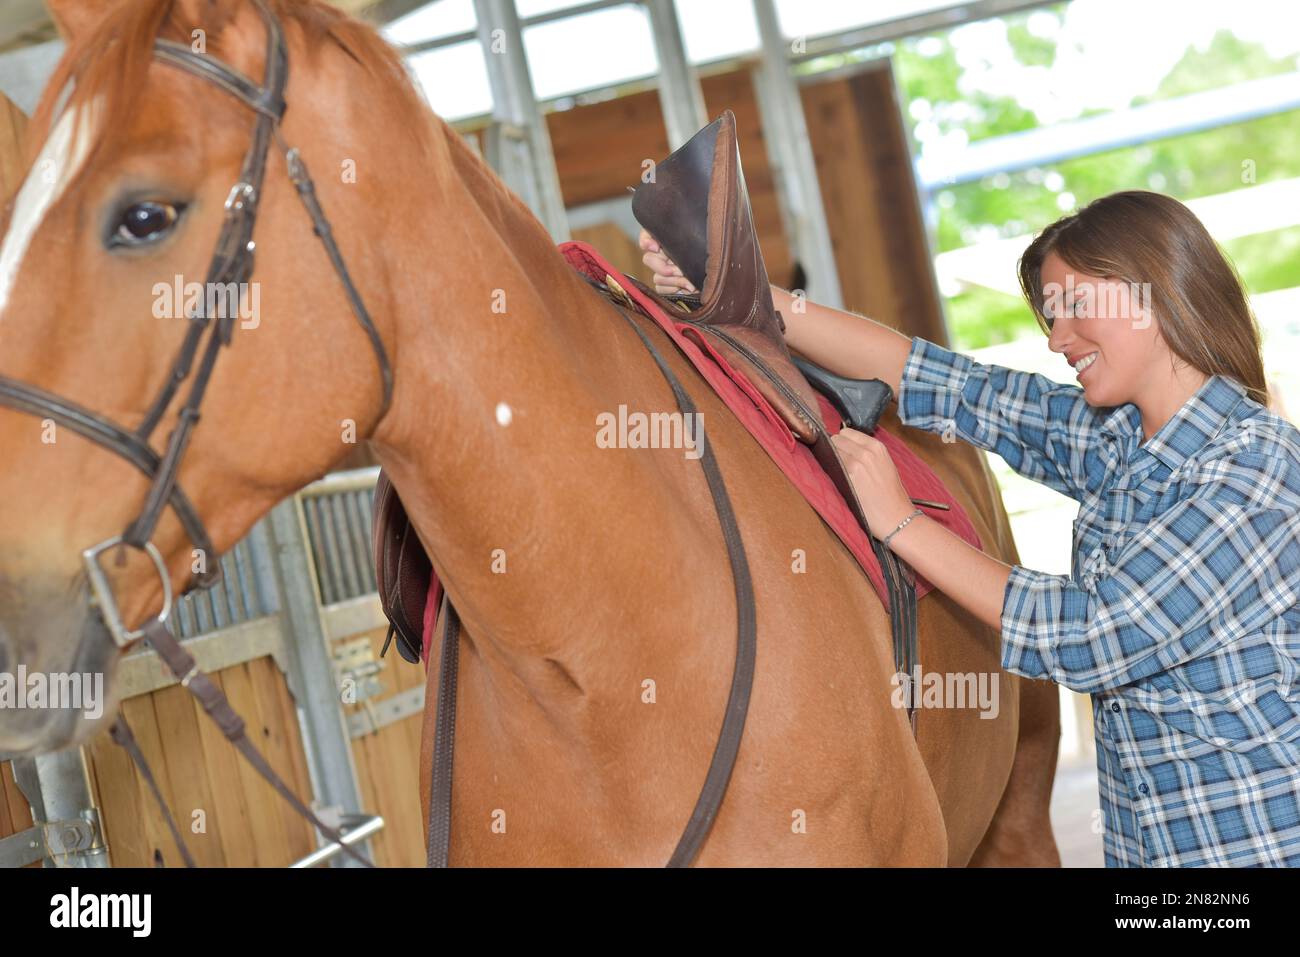 Woman buckling strap under saddle Stock Photo